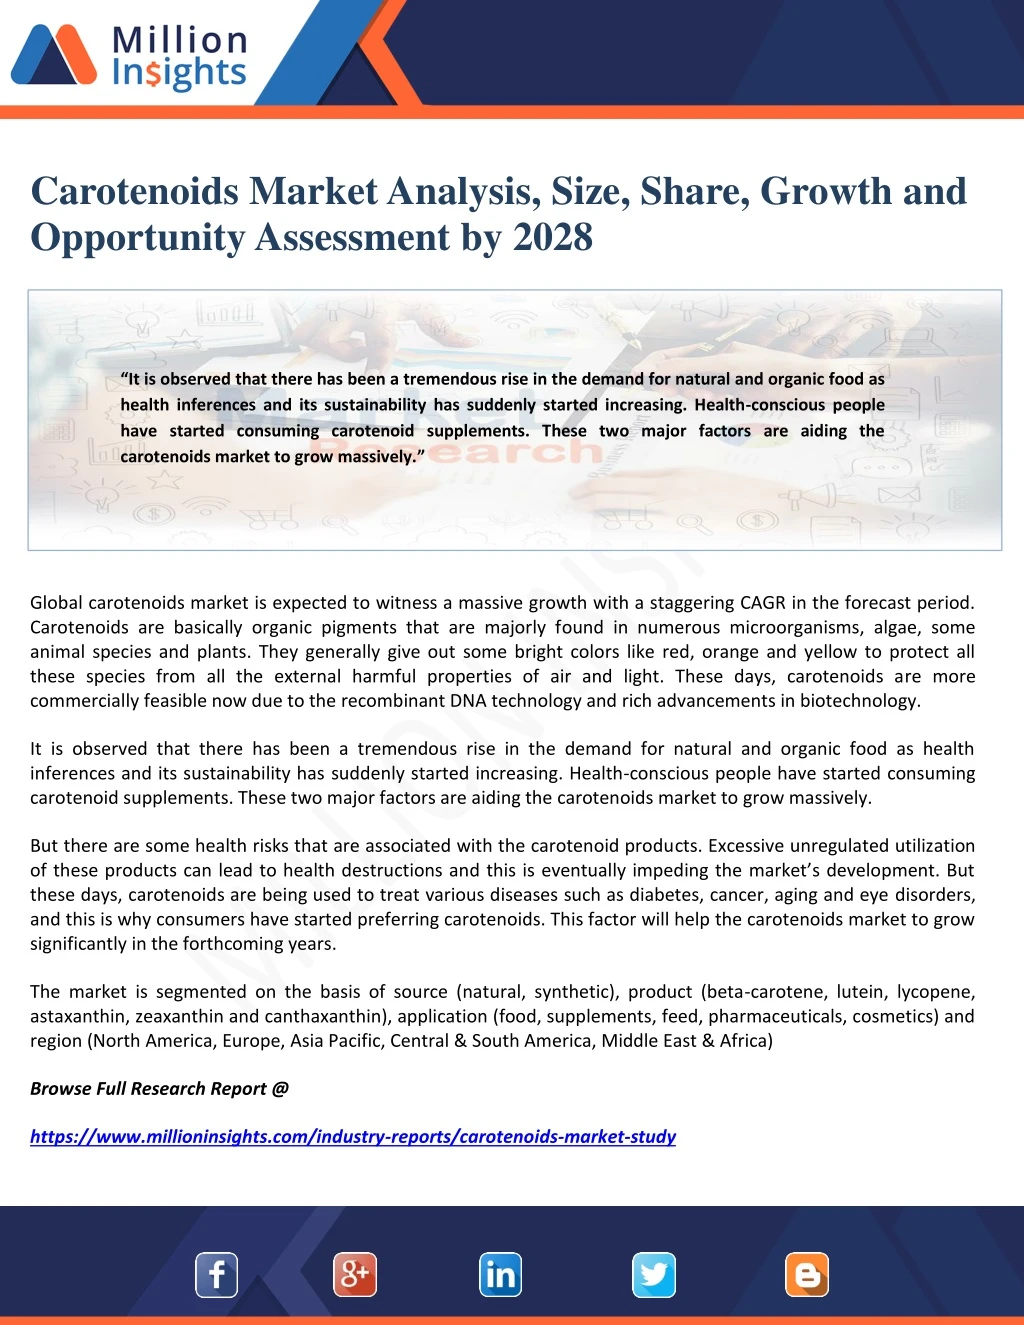 carotenoids market analysis size share growth